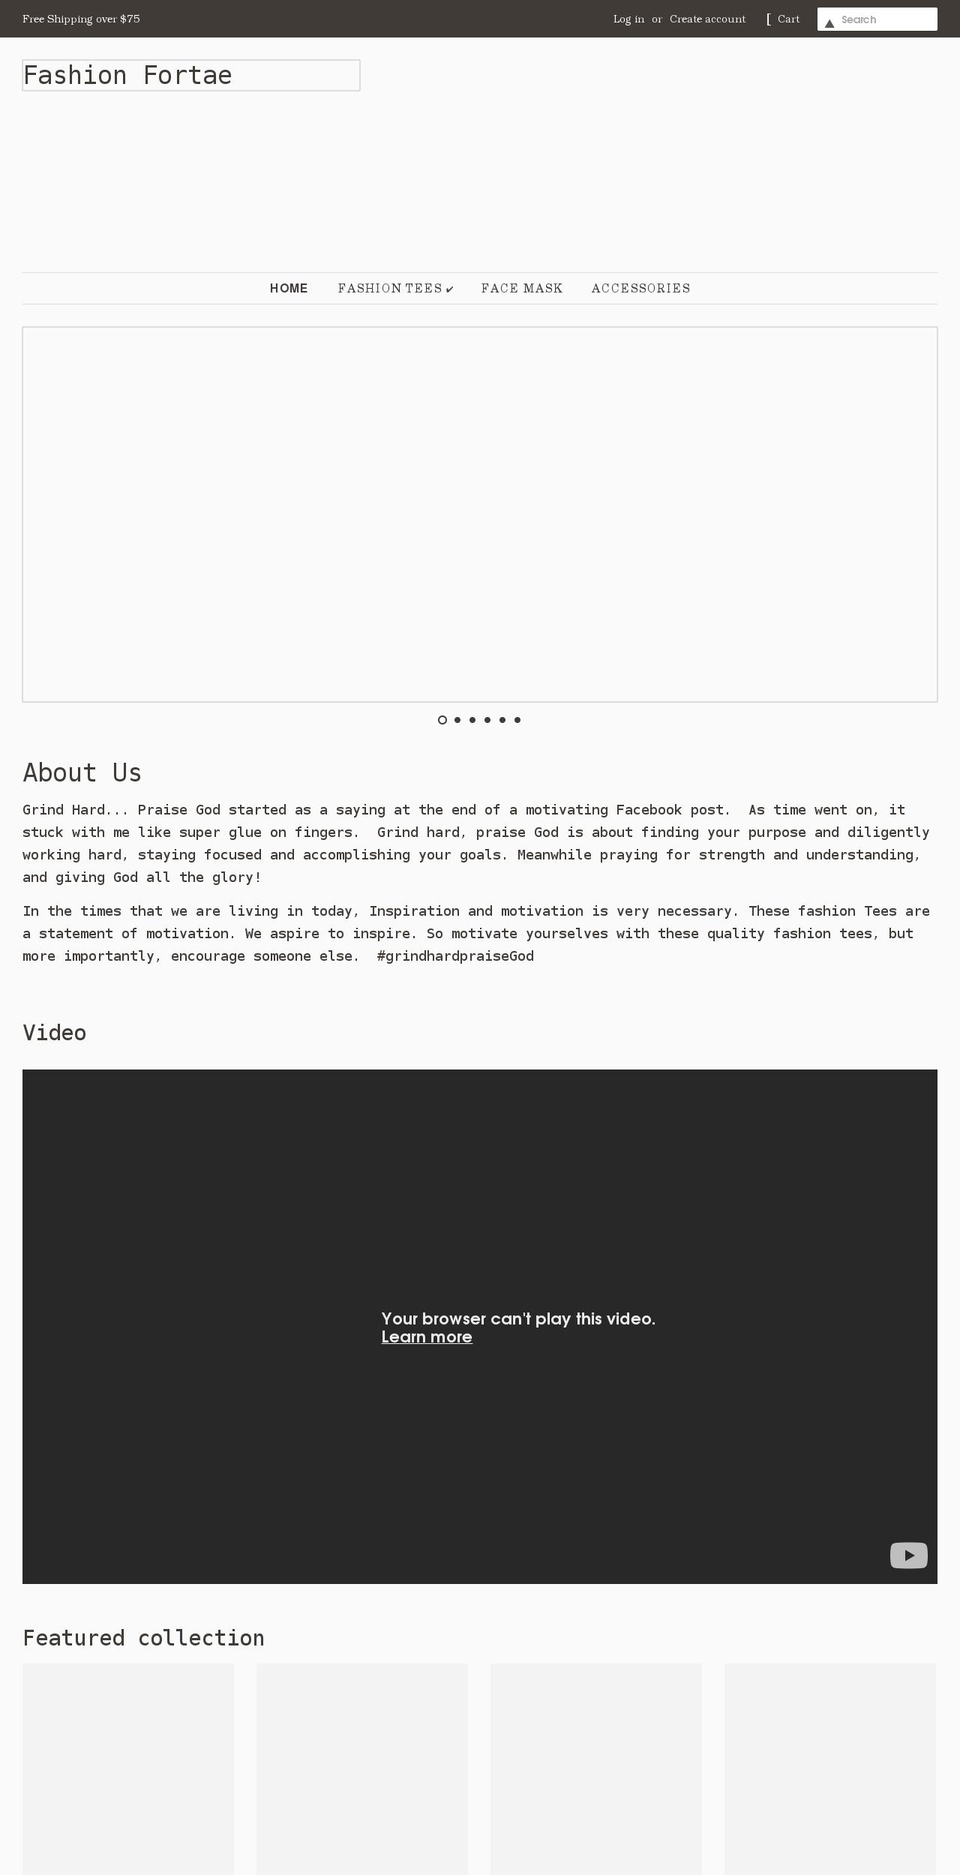 Backup - Shopify theme site example fashionfortae.com